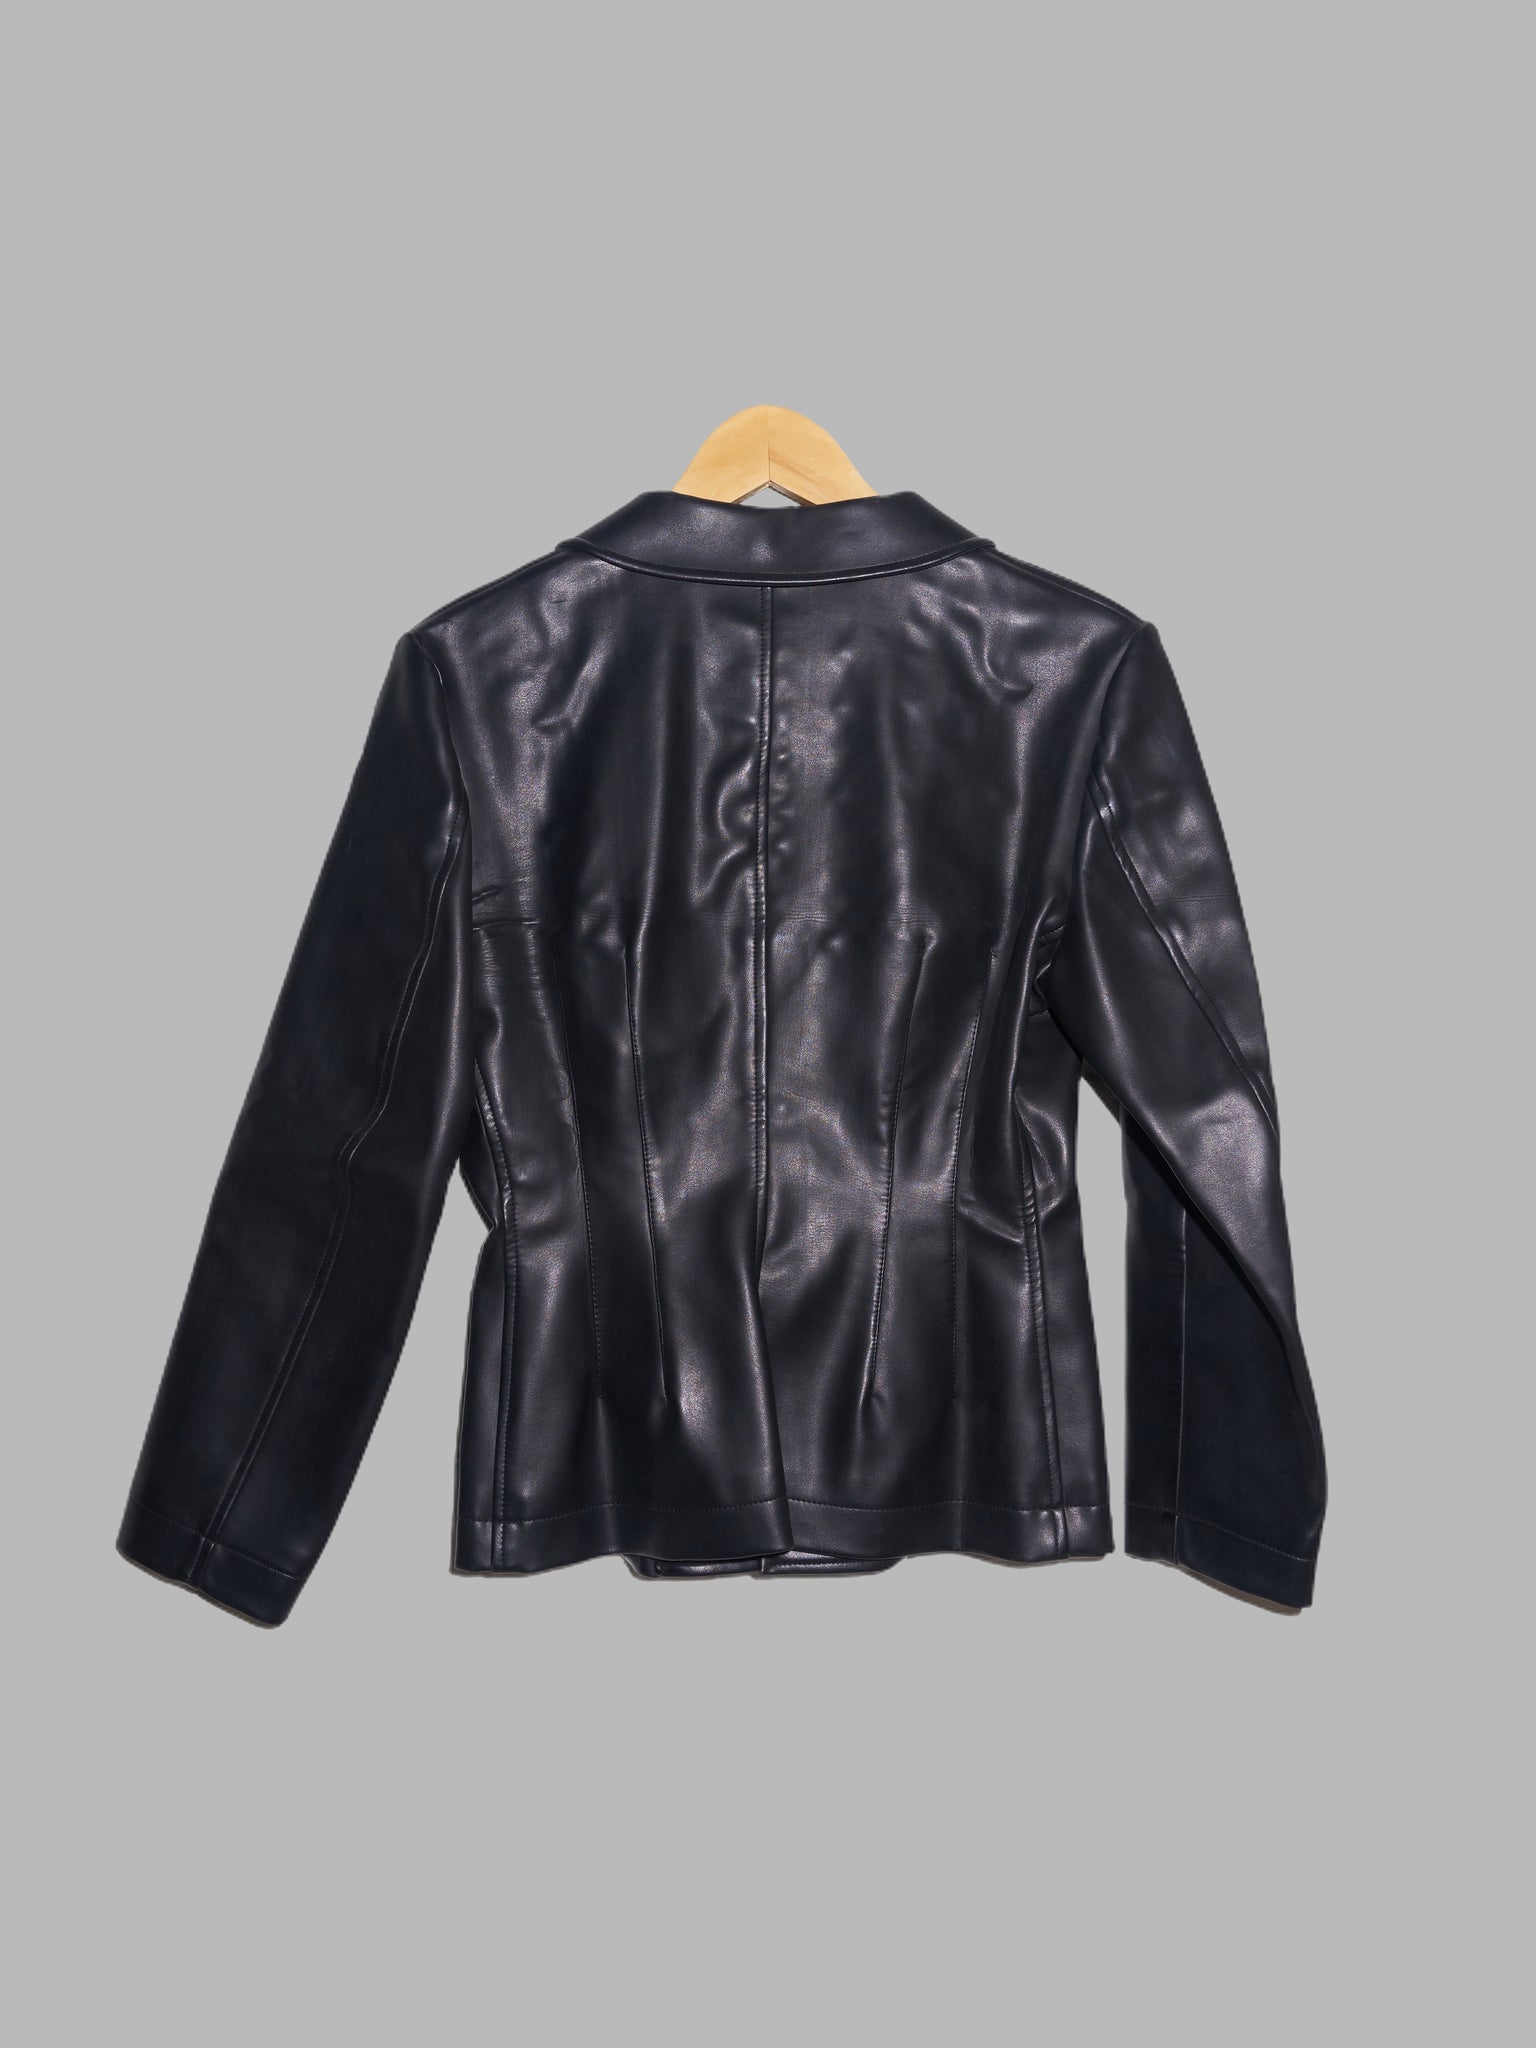 Tricot Comme des Garcons AW1991 black darted waist vinyl leather jacket - S M